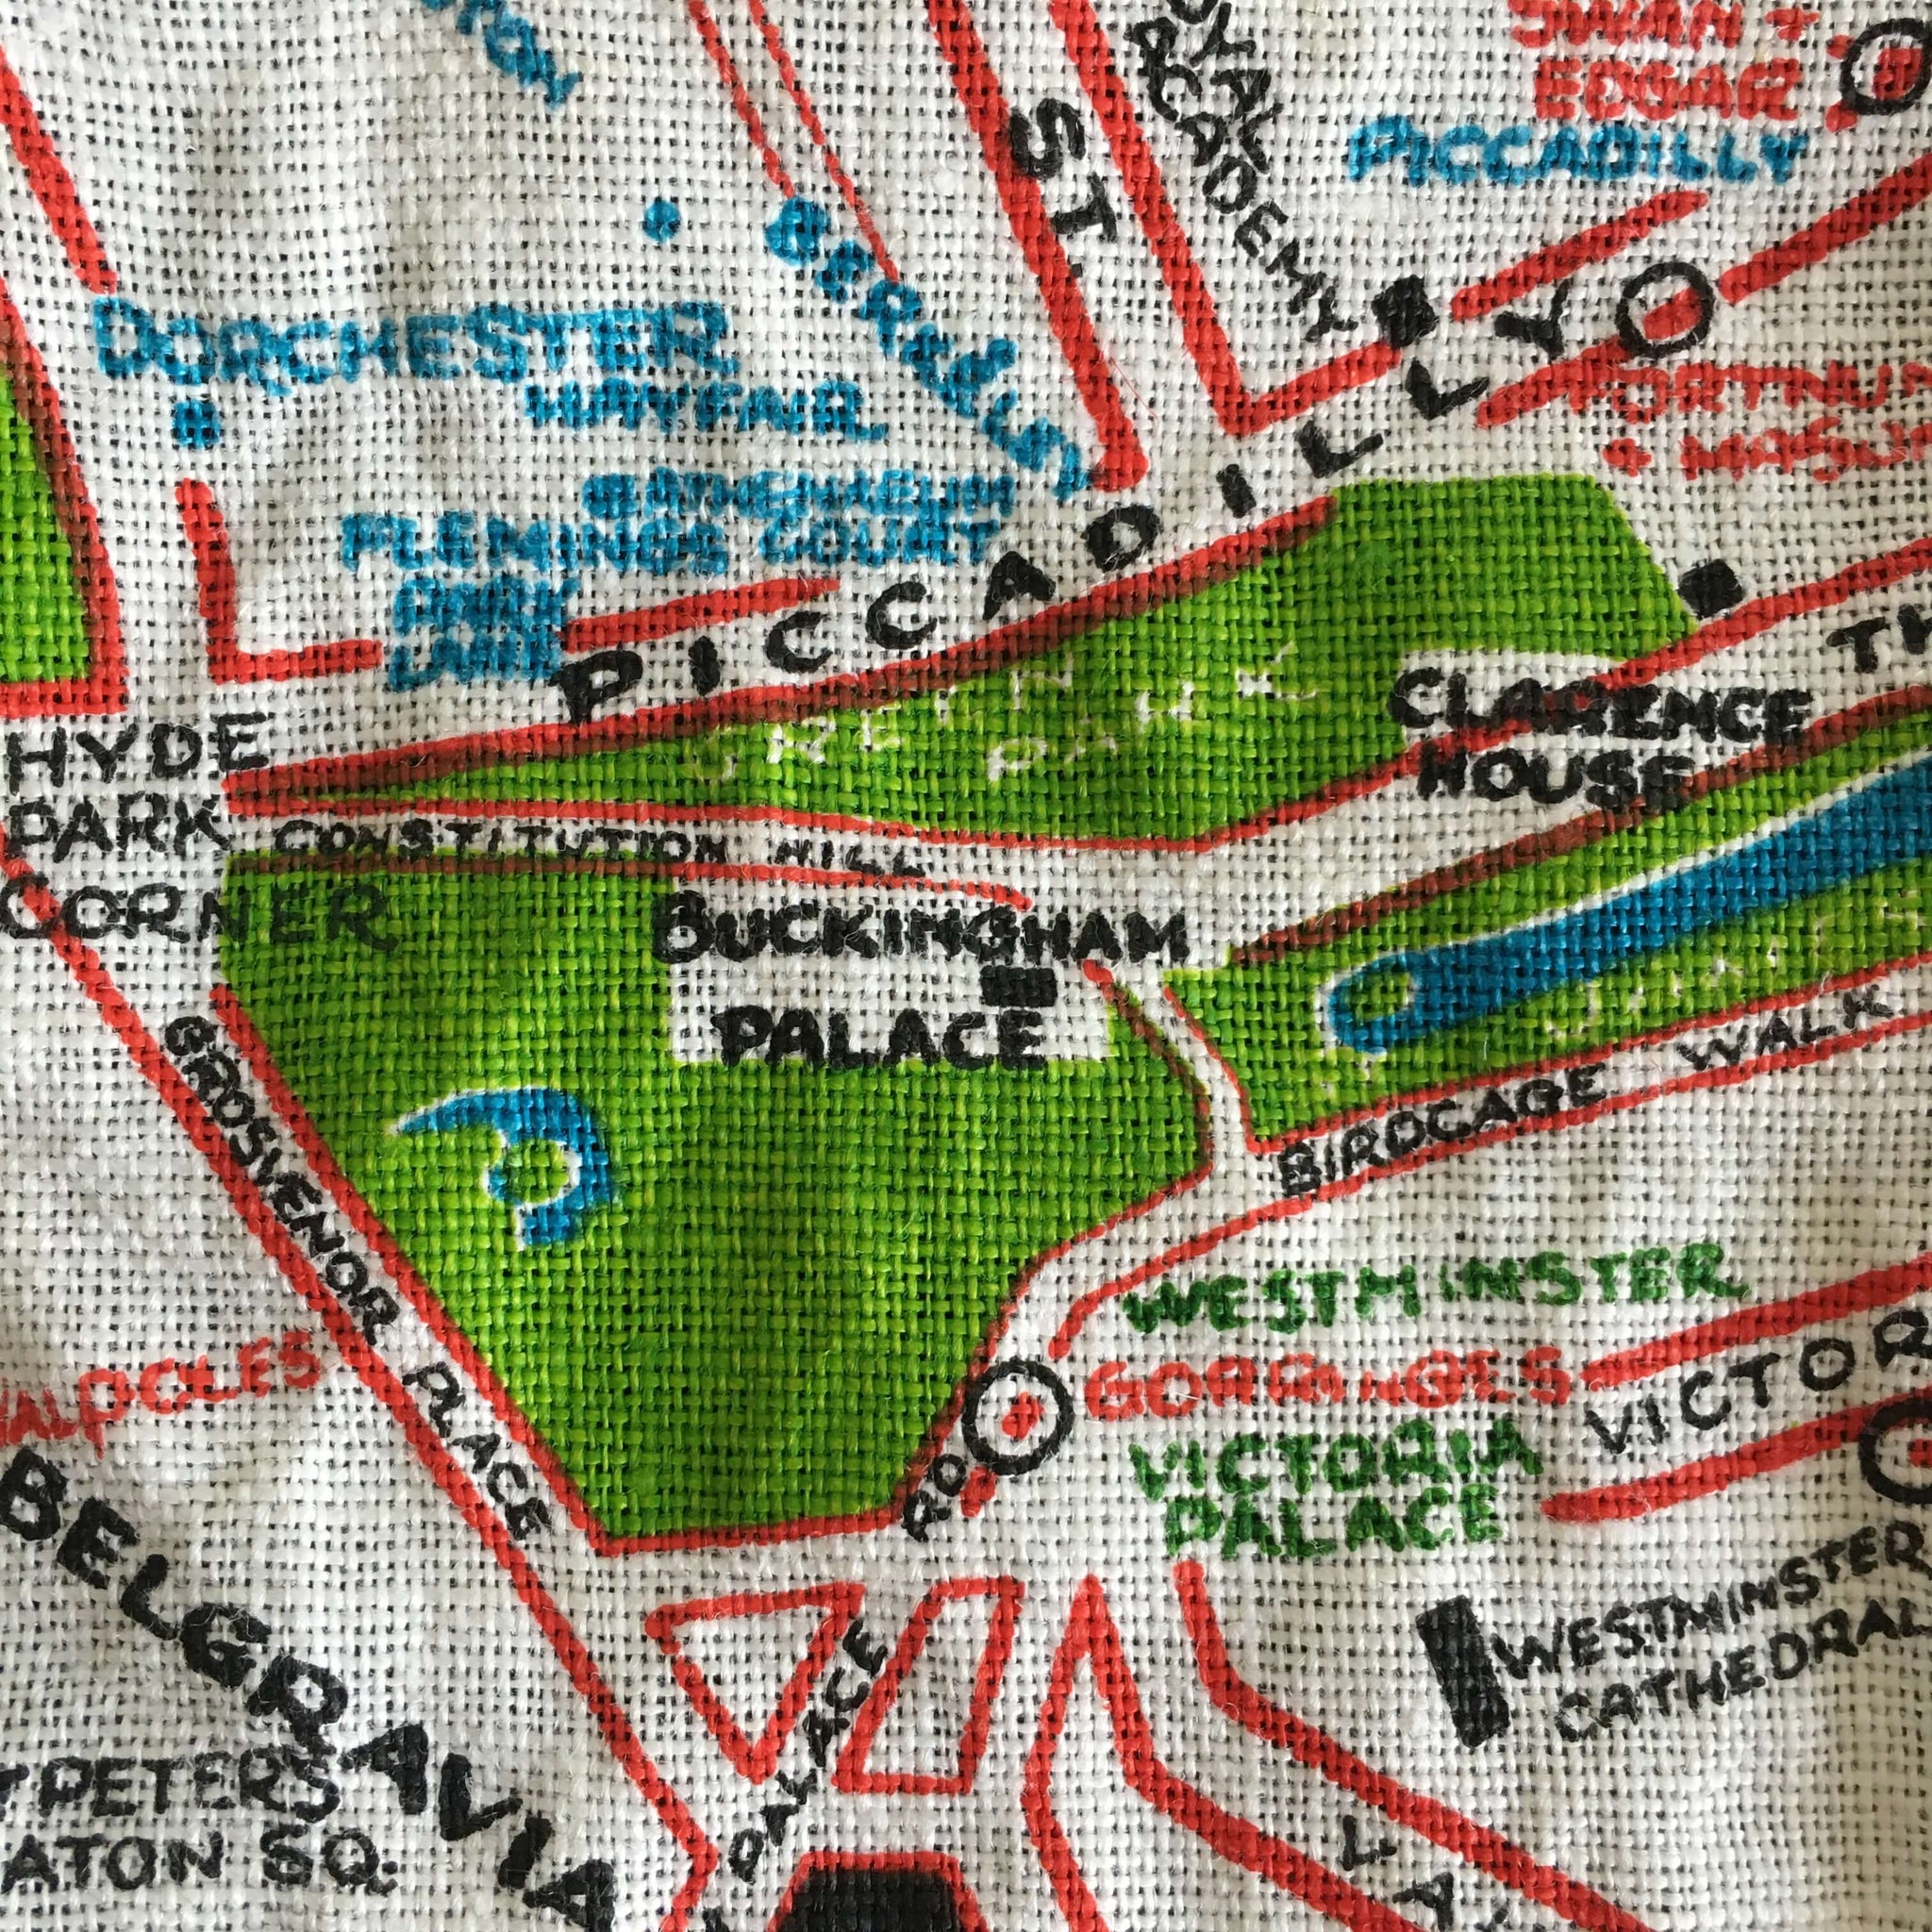 Vintage 1960's London Tea Towel - Map of Visitor's London Travel Souvenir - Irish Linen